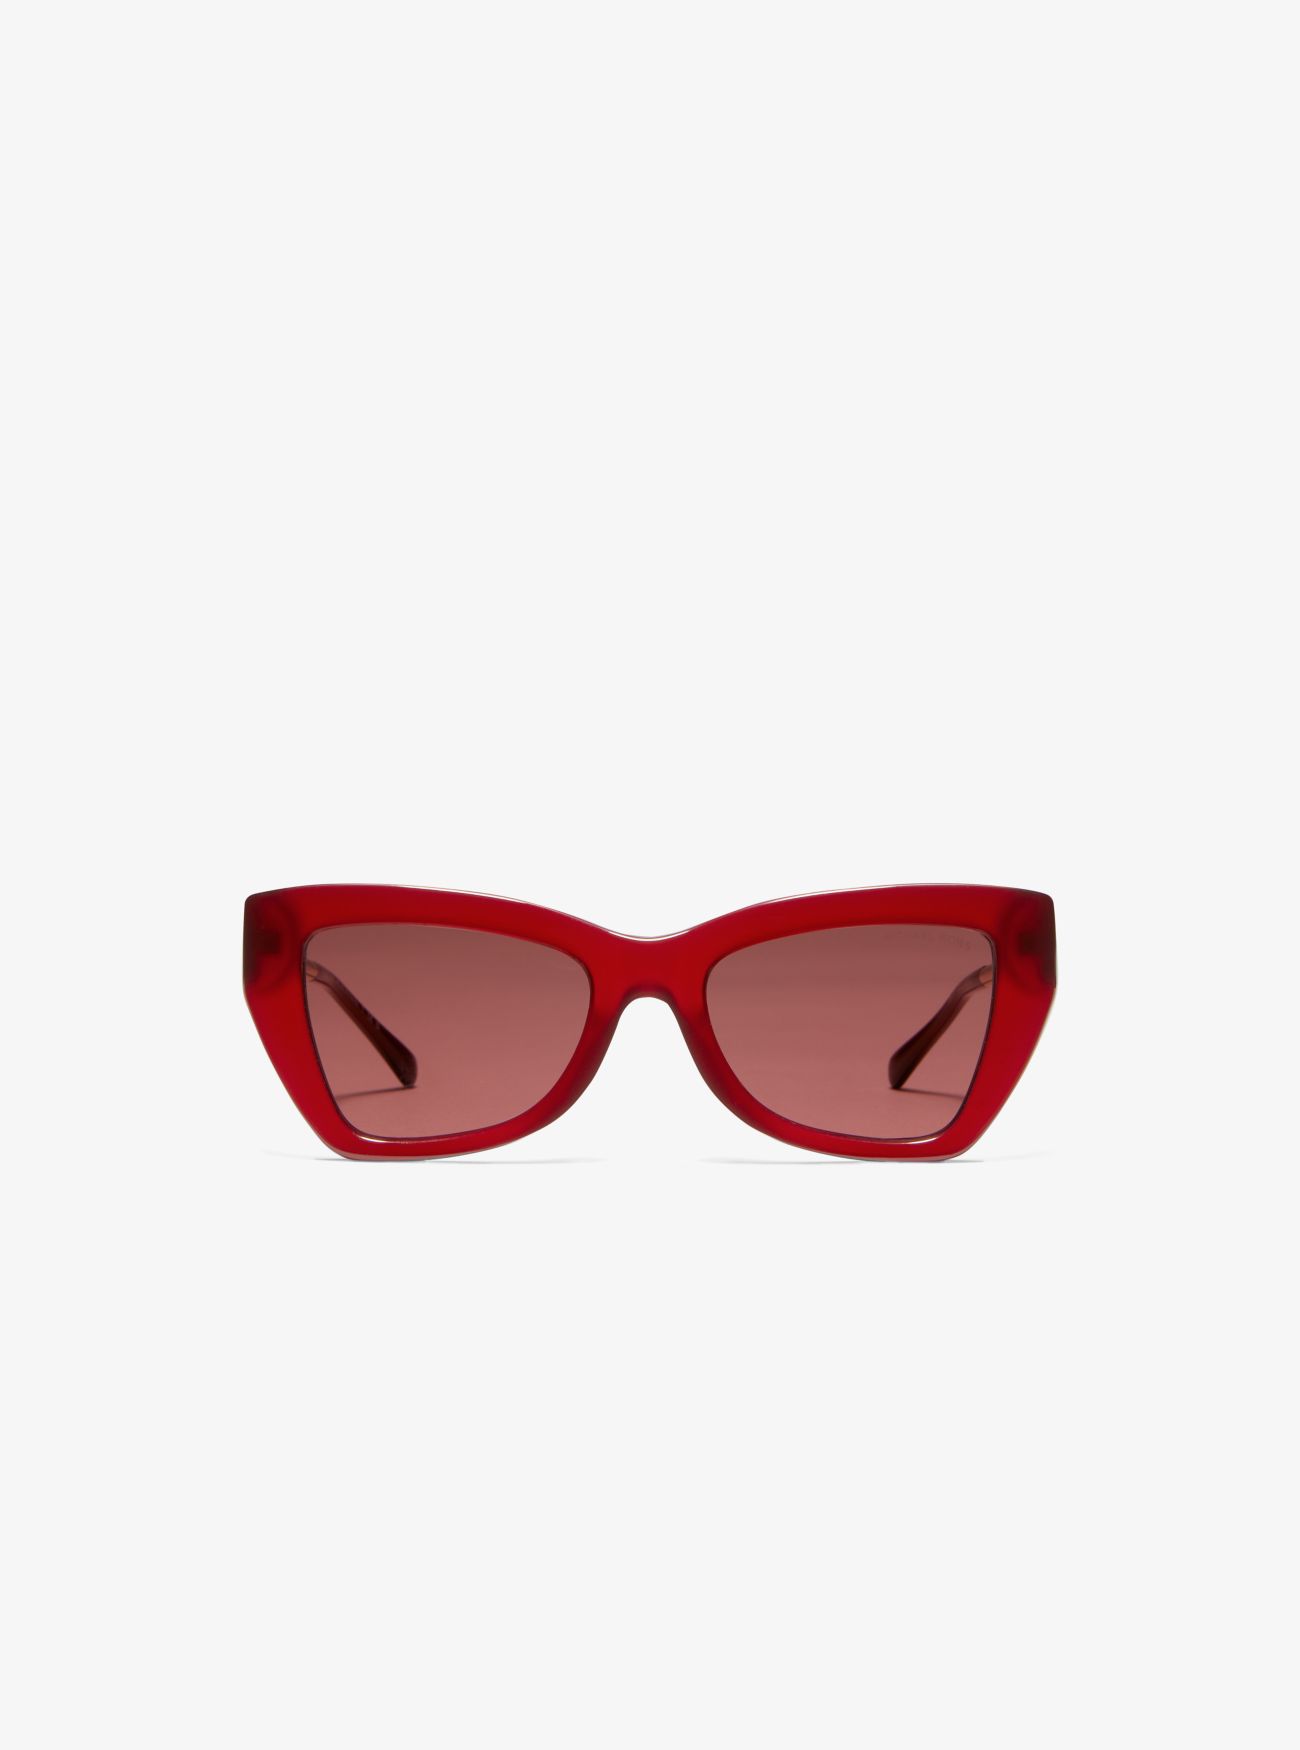 MK Montecito Sunglasses - Crimson - Michael Kors